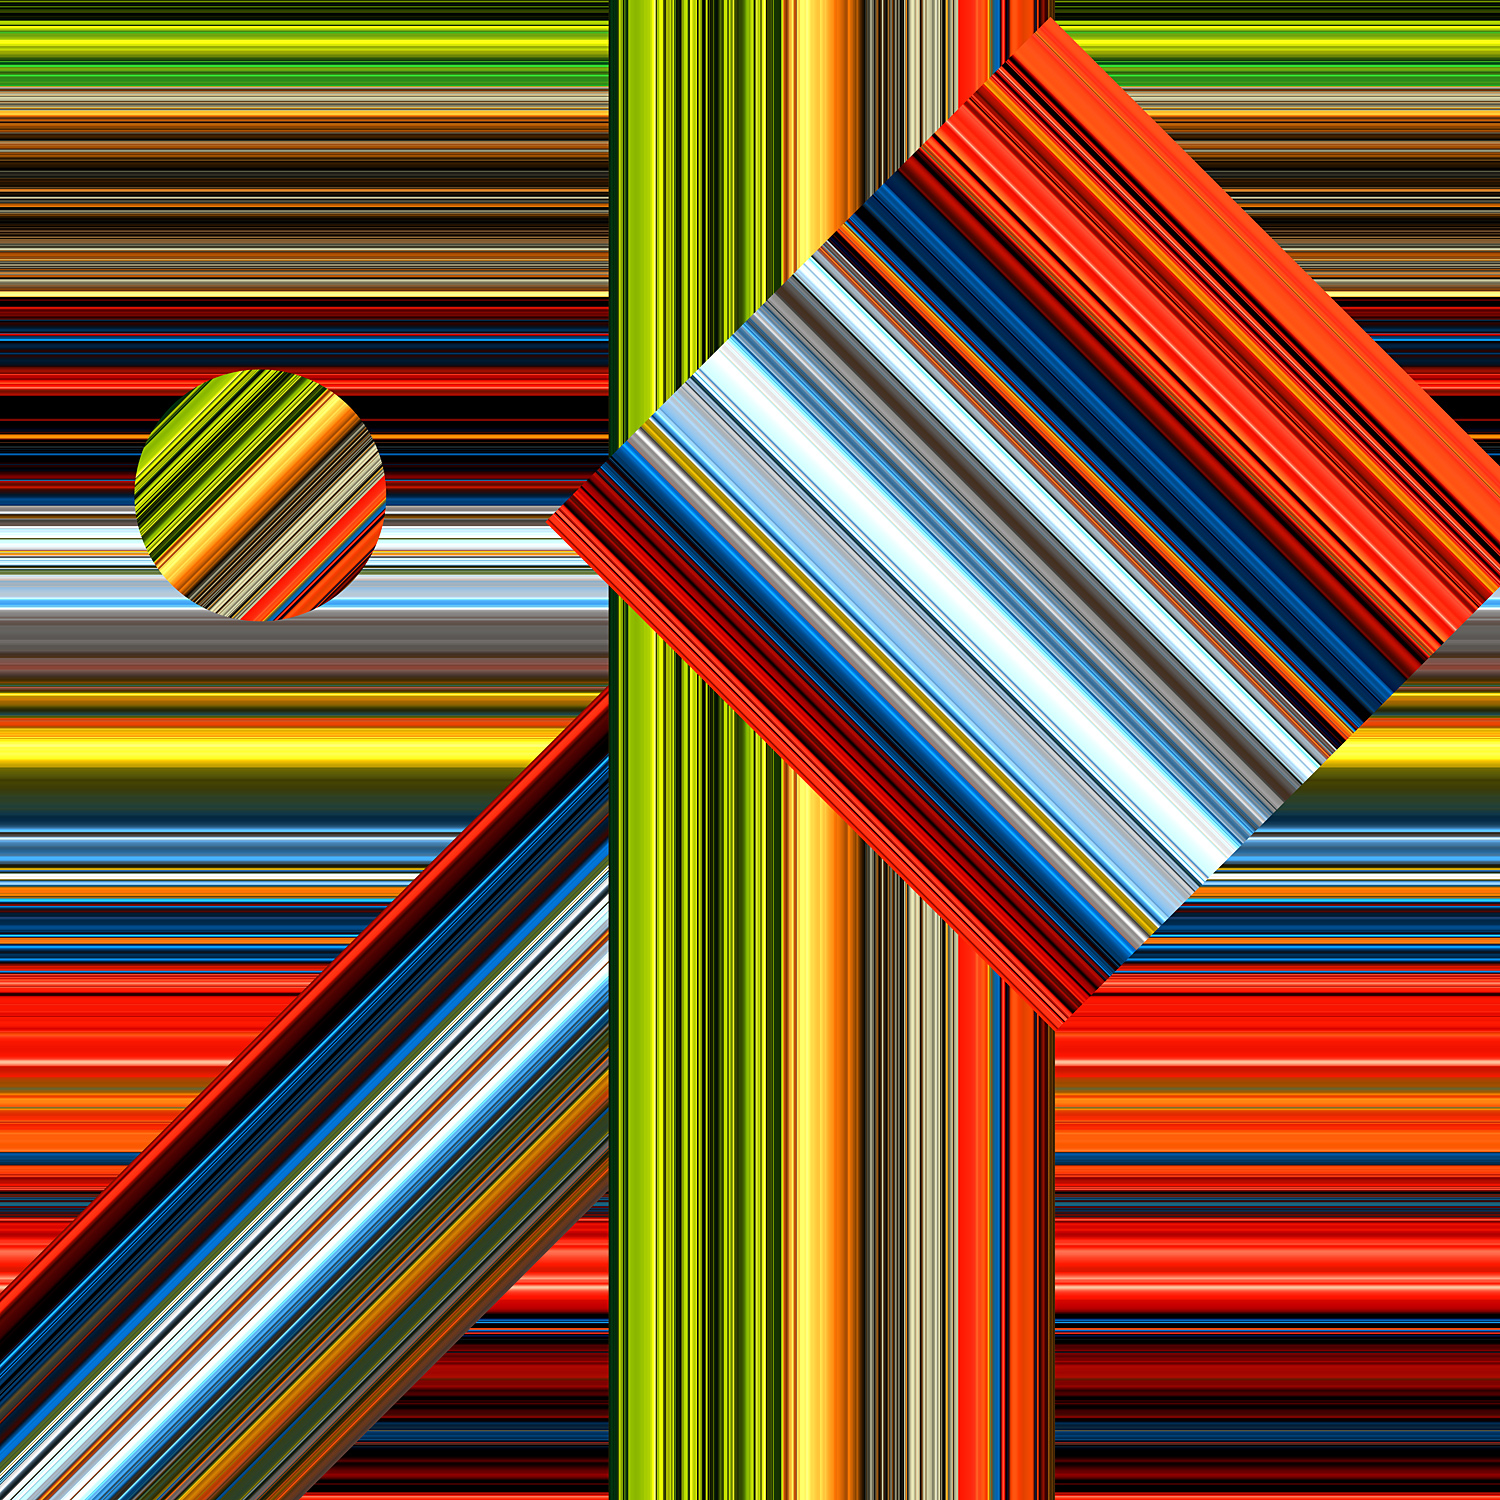 Stripes from k3 48x48.jpg